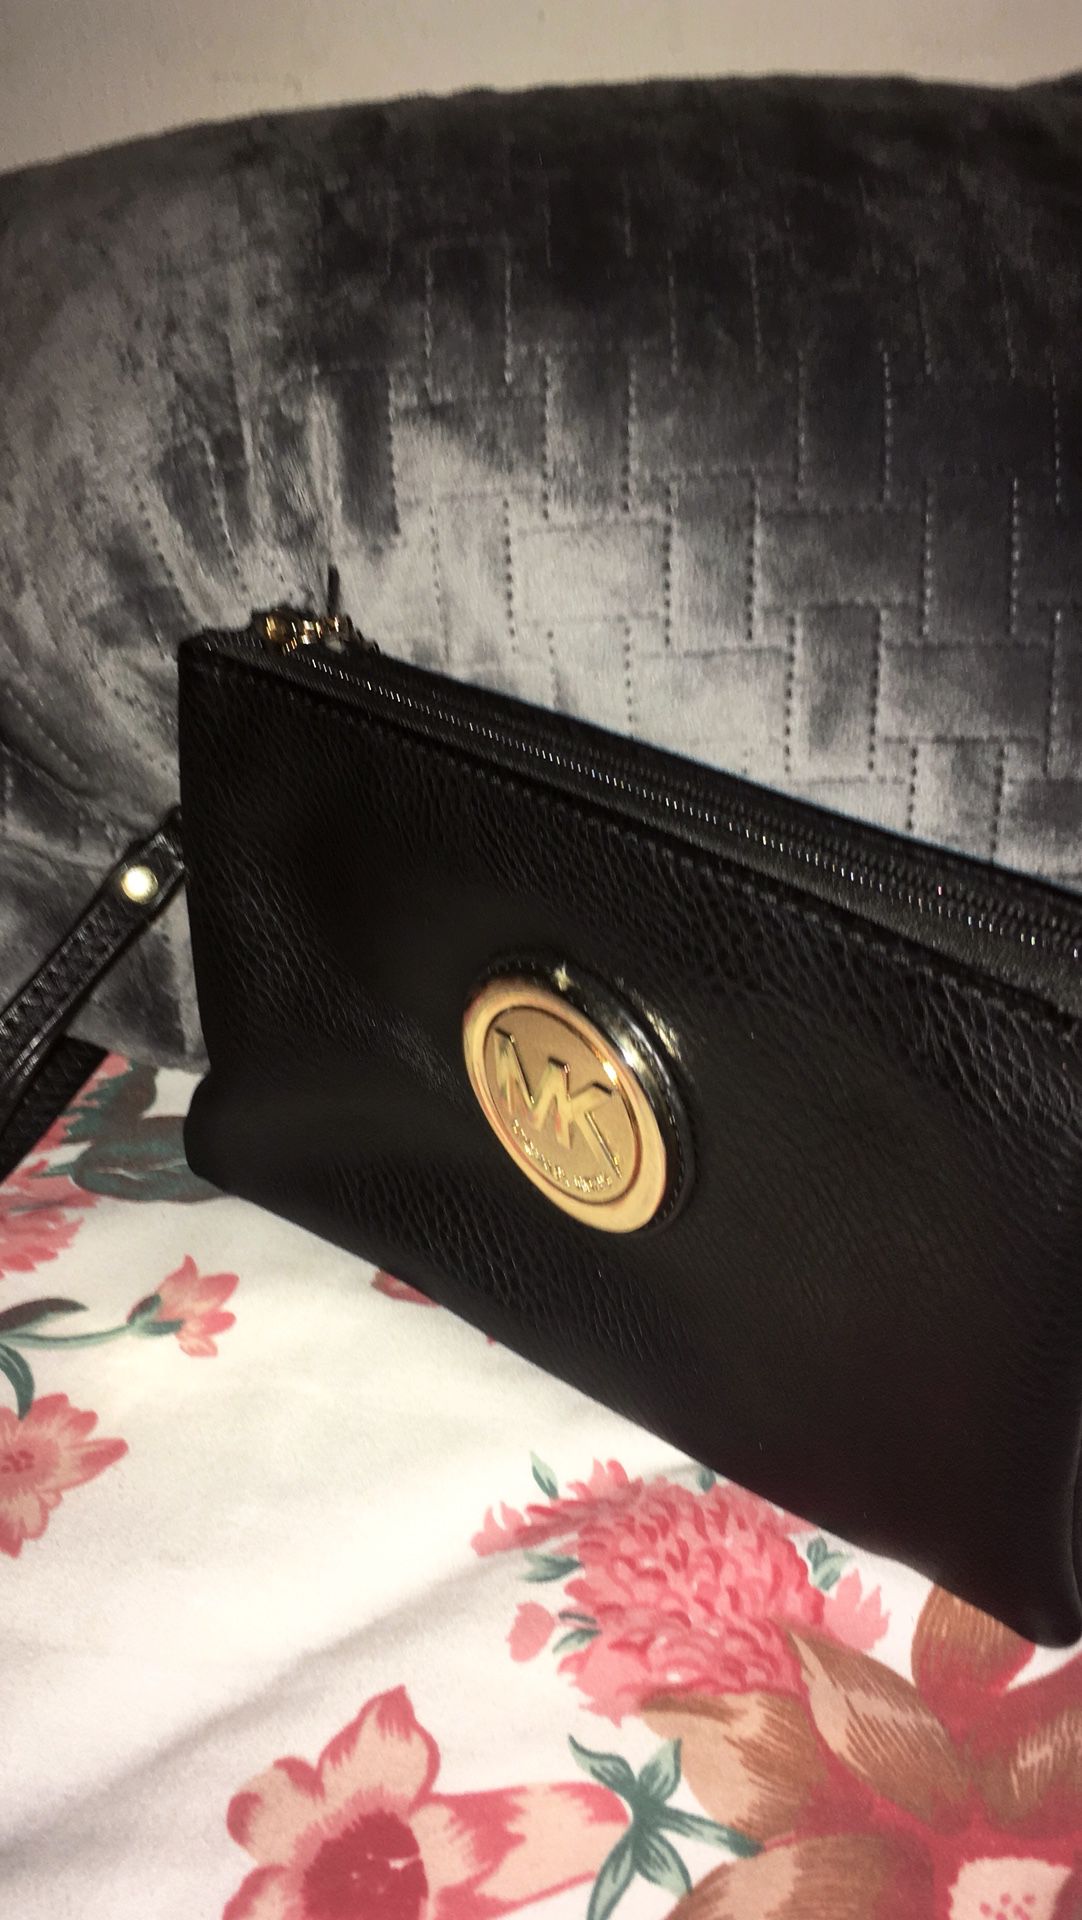 Michael Kors clutch purse